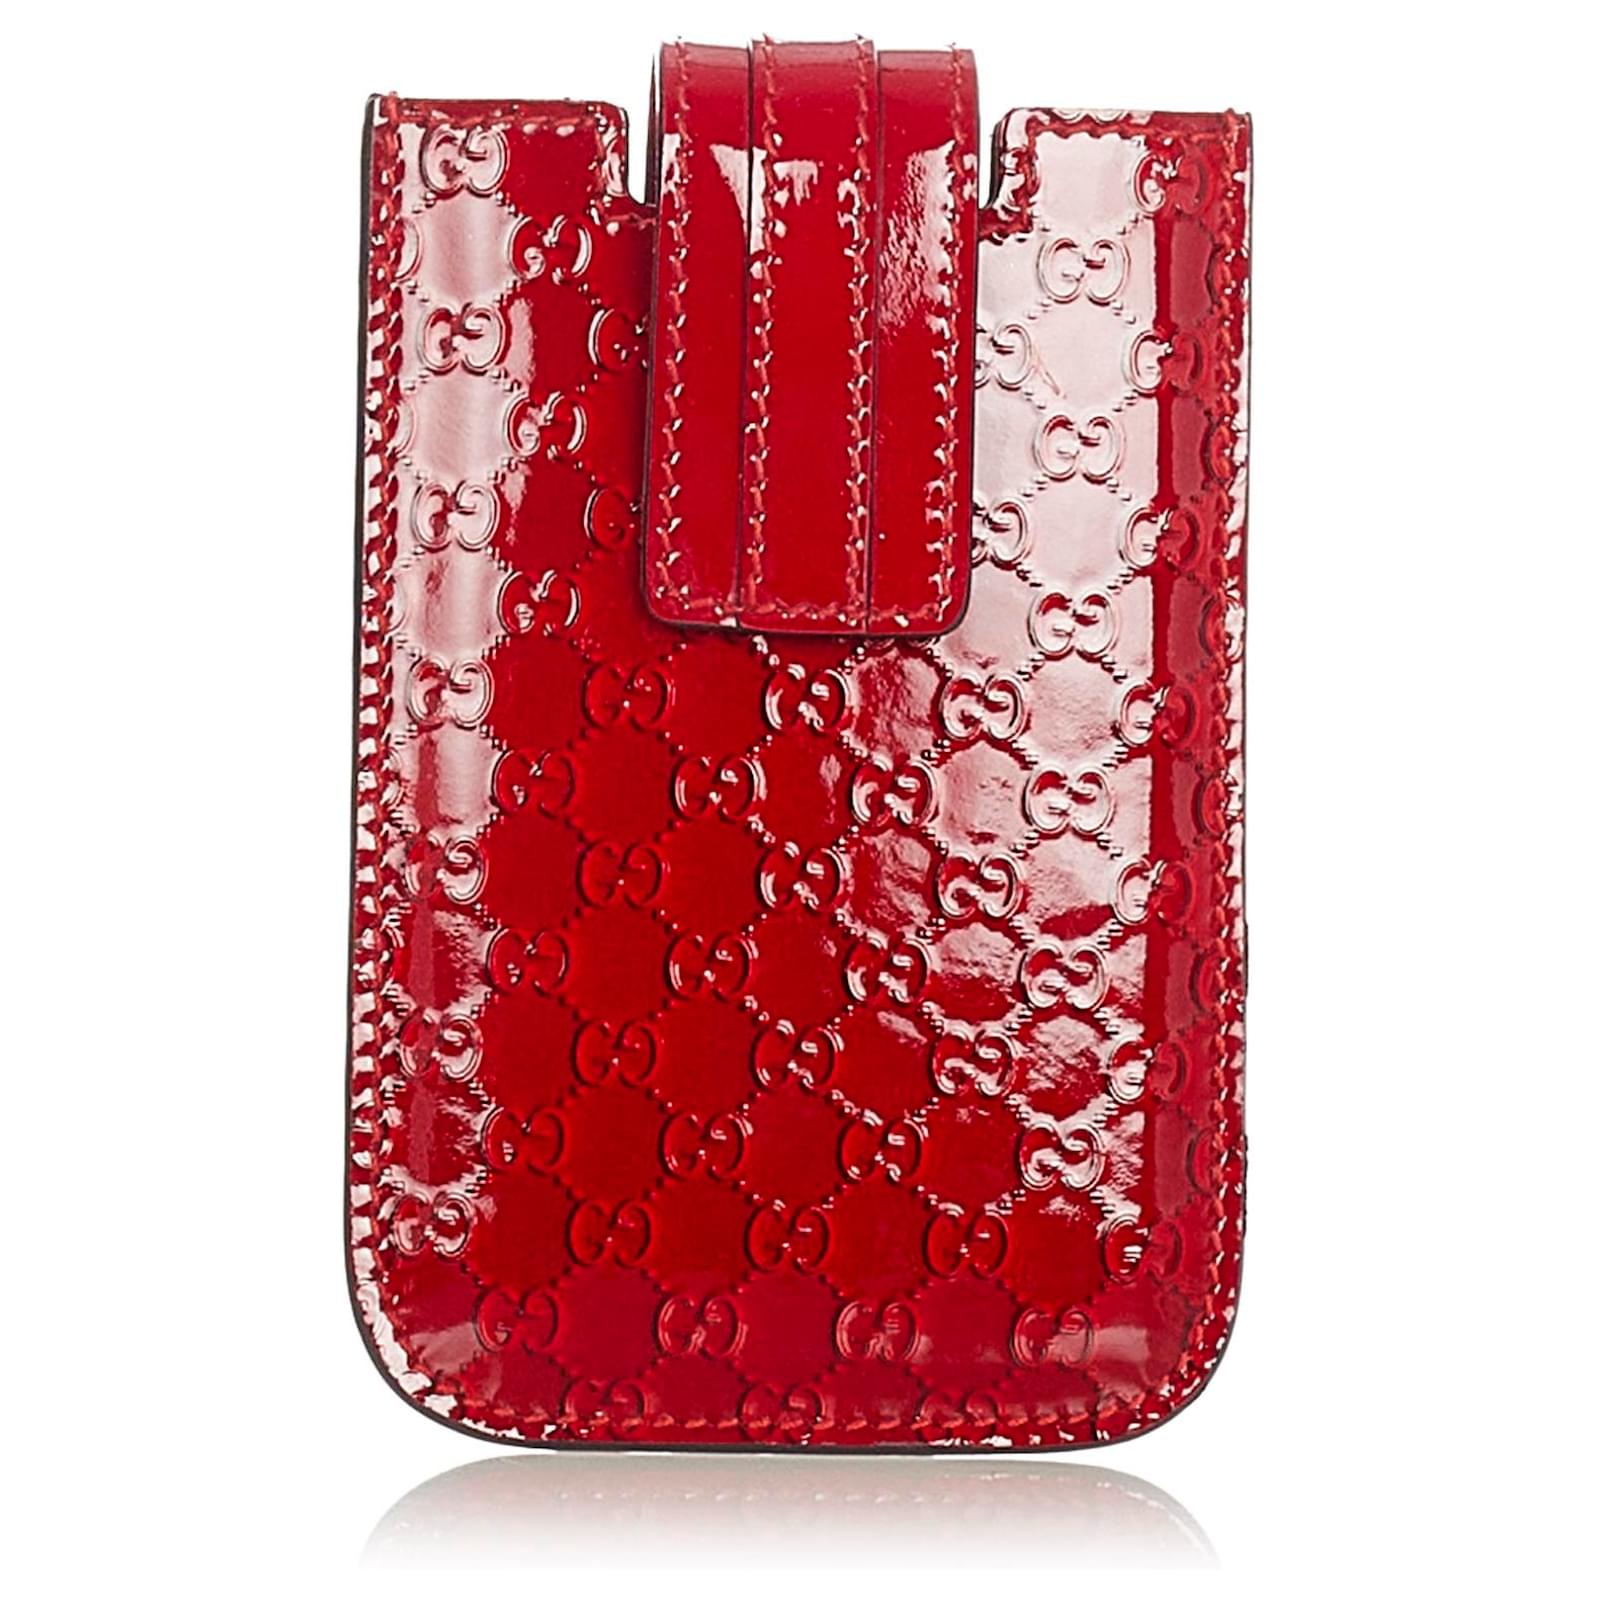 Gucci Red Guccissima Patent Leather iPhone 5 case - Closet